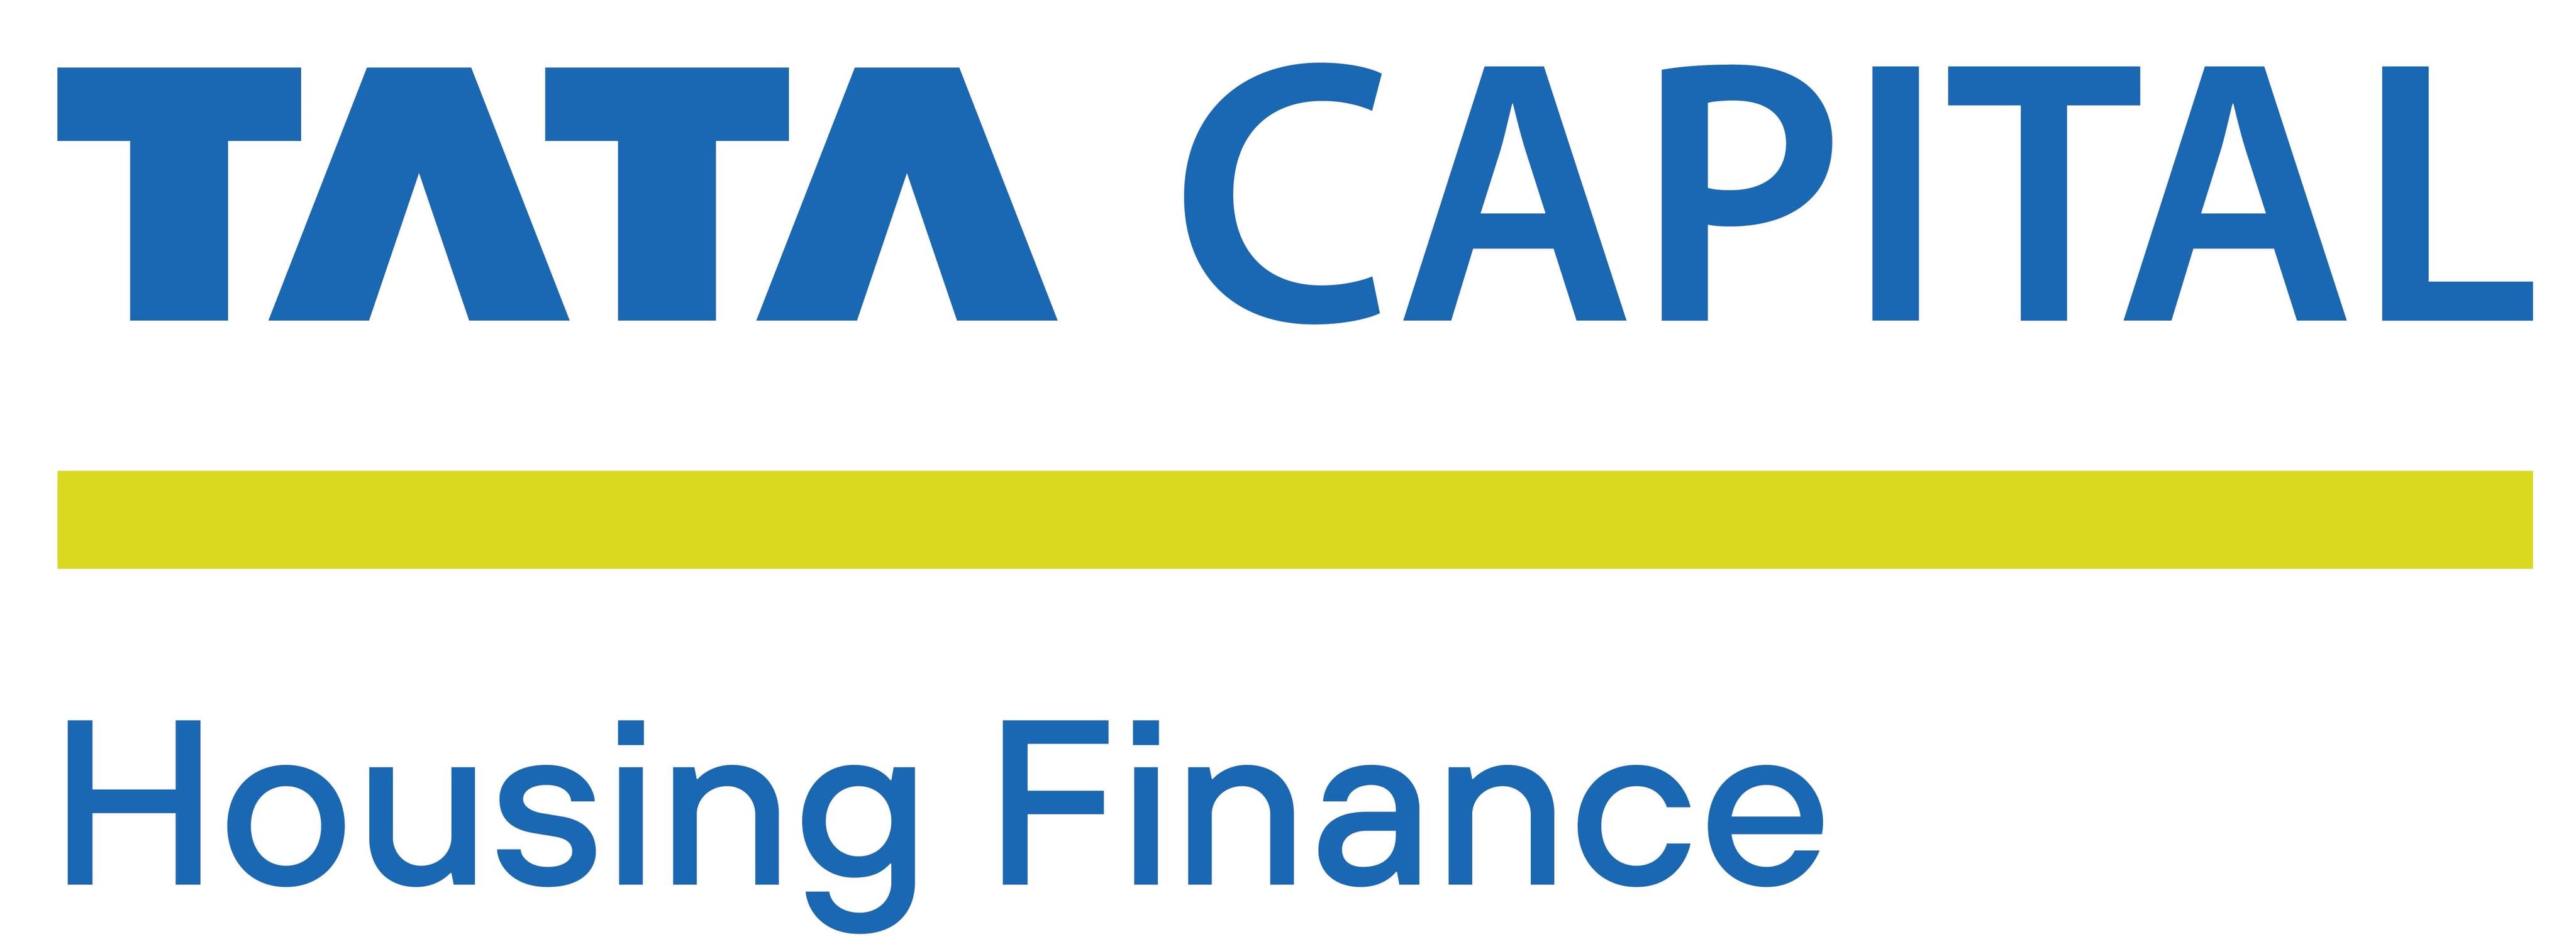 Tata Capital Housing Finance Limited